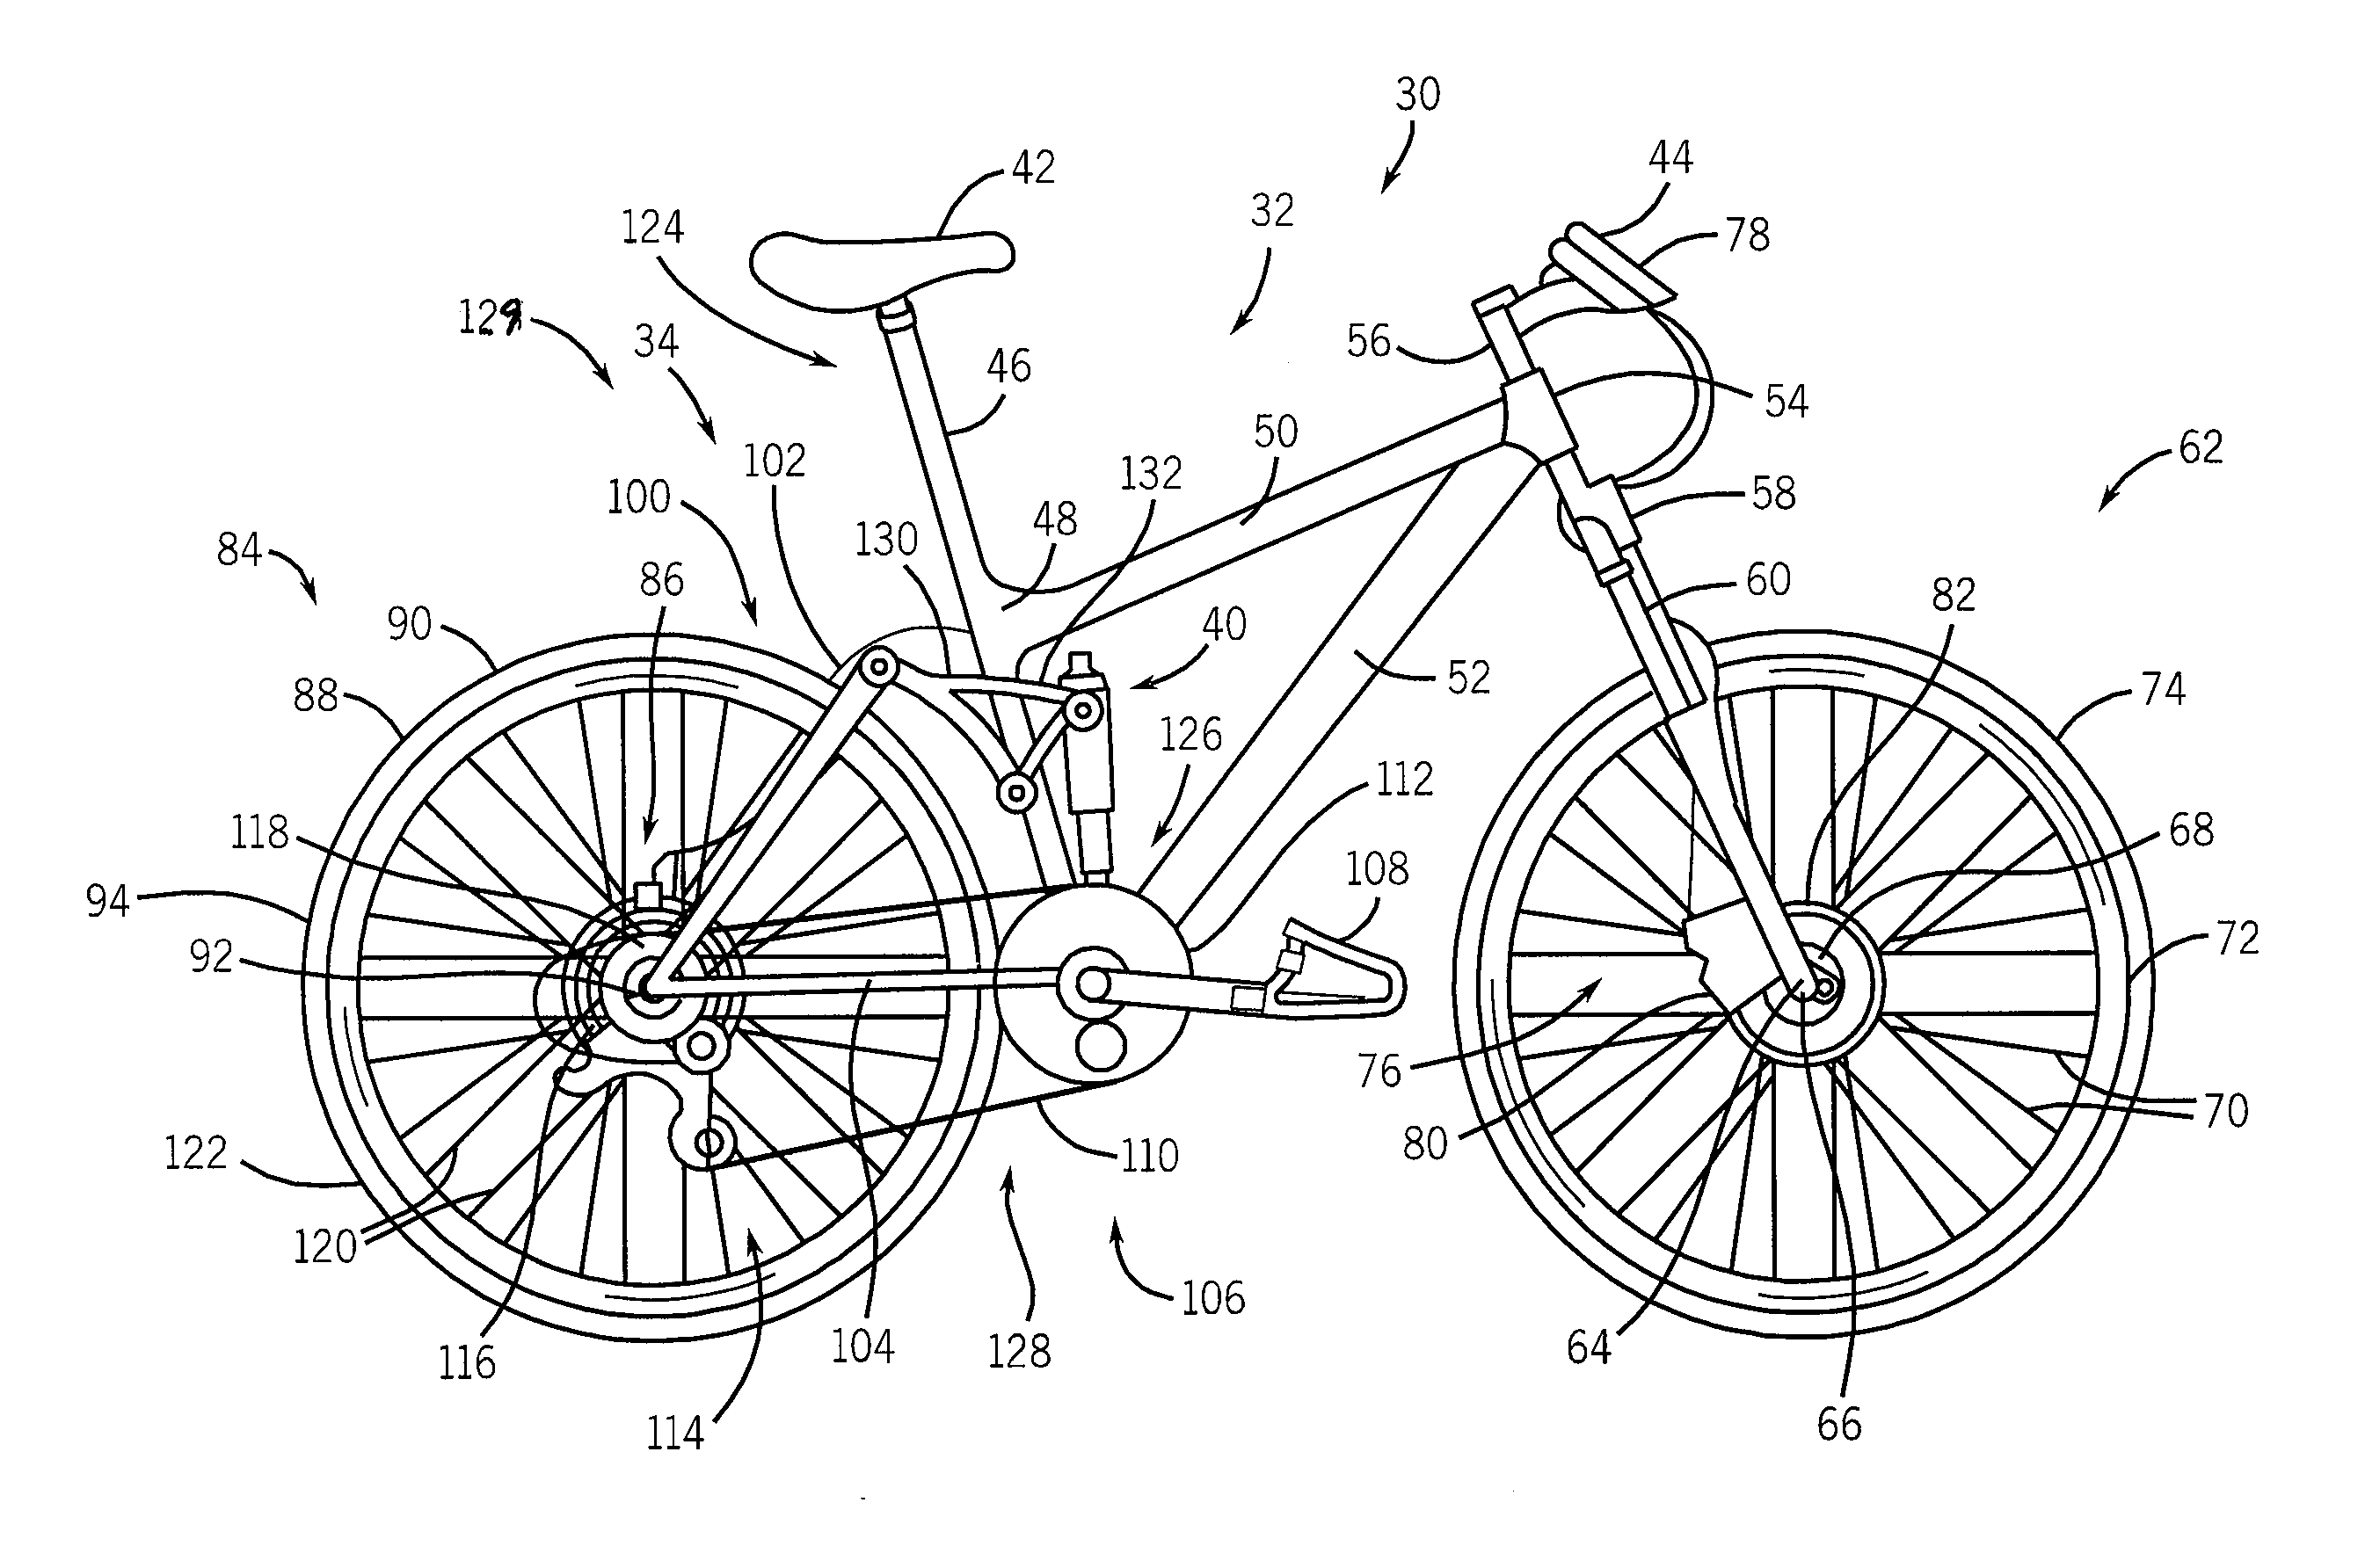 Bicycle shock assemblies